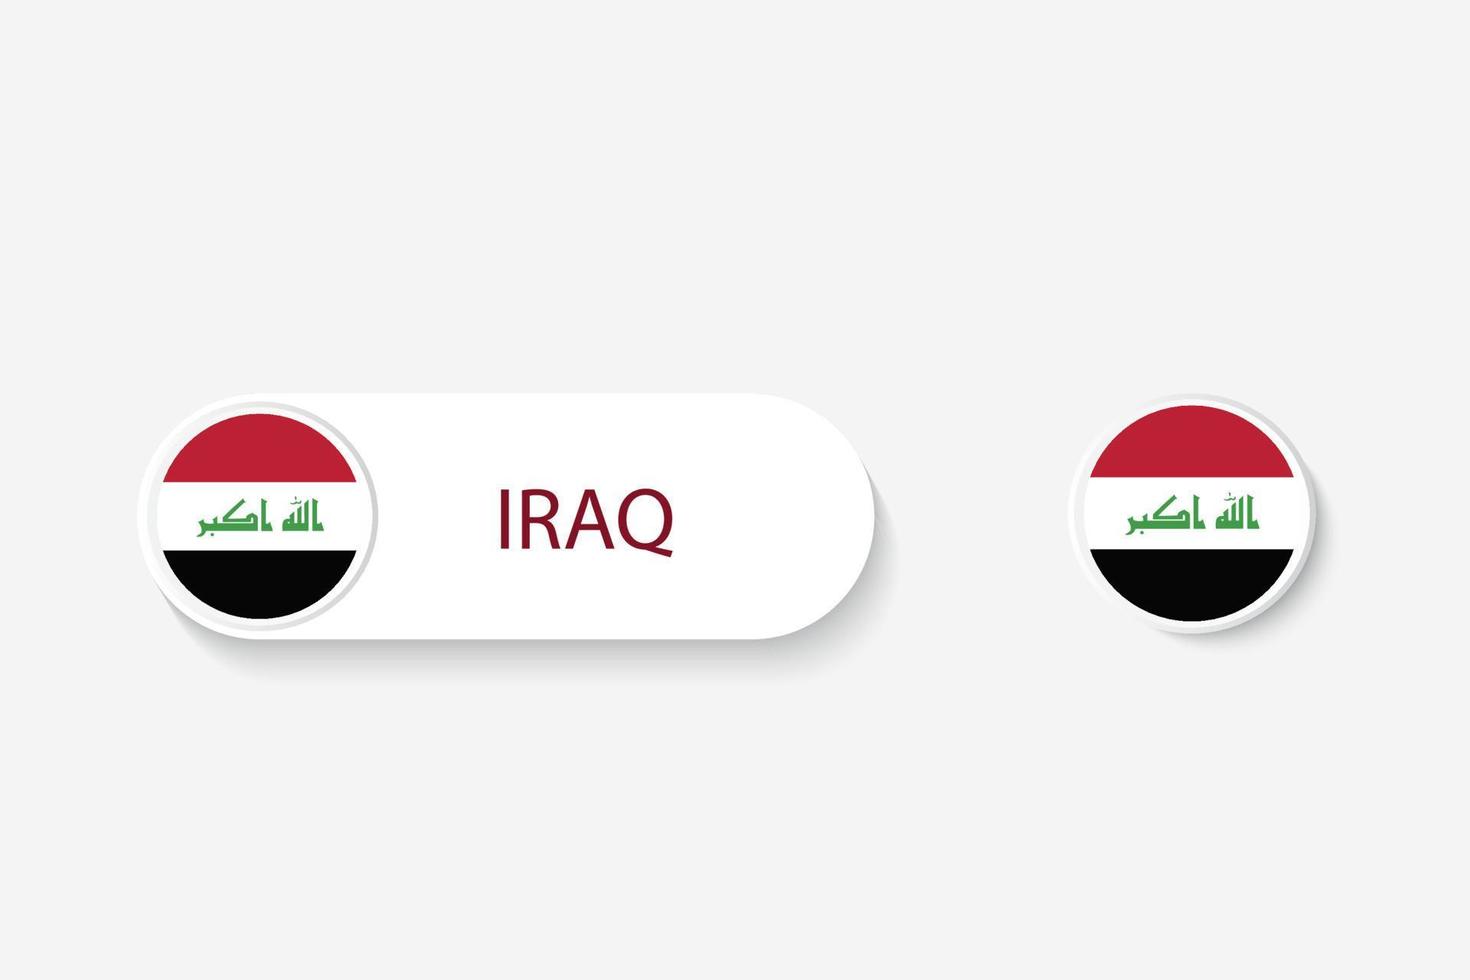 Irak knappen flagga i illustration av oval formad med ordet irak. och knappen flagga irak. vektor